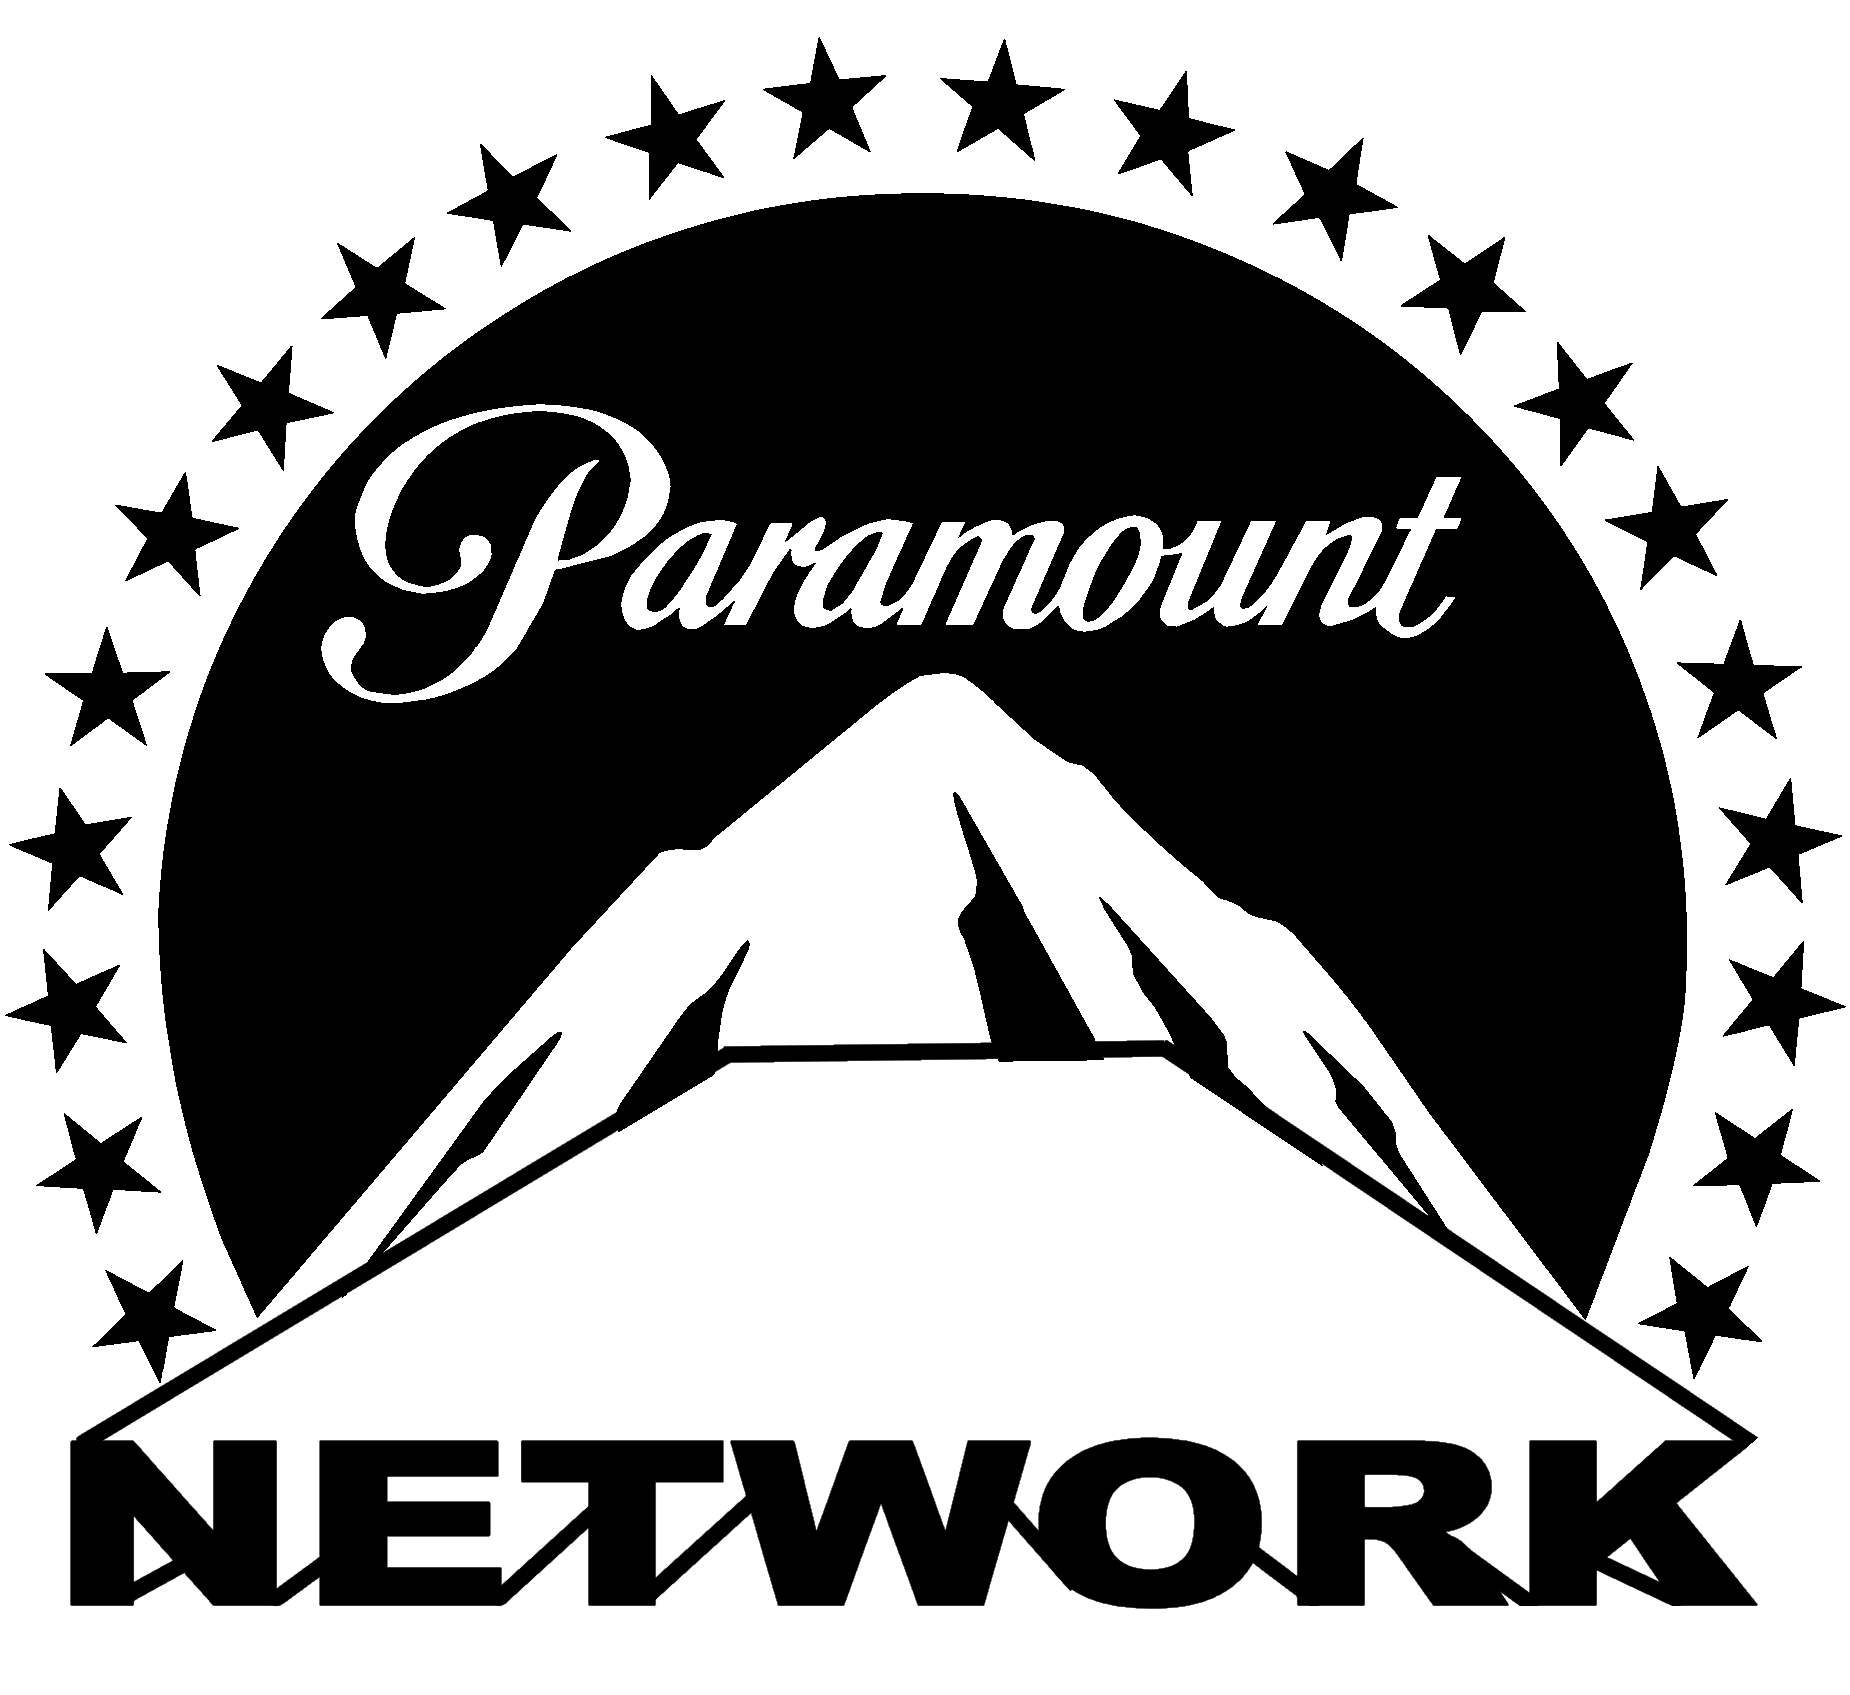 Paramount TV Logo - Paramount Television Network | Dream Logos Wiki | FANDOM powered by ...